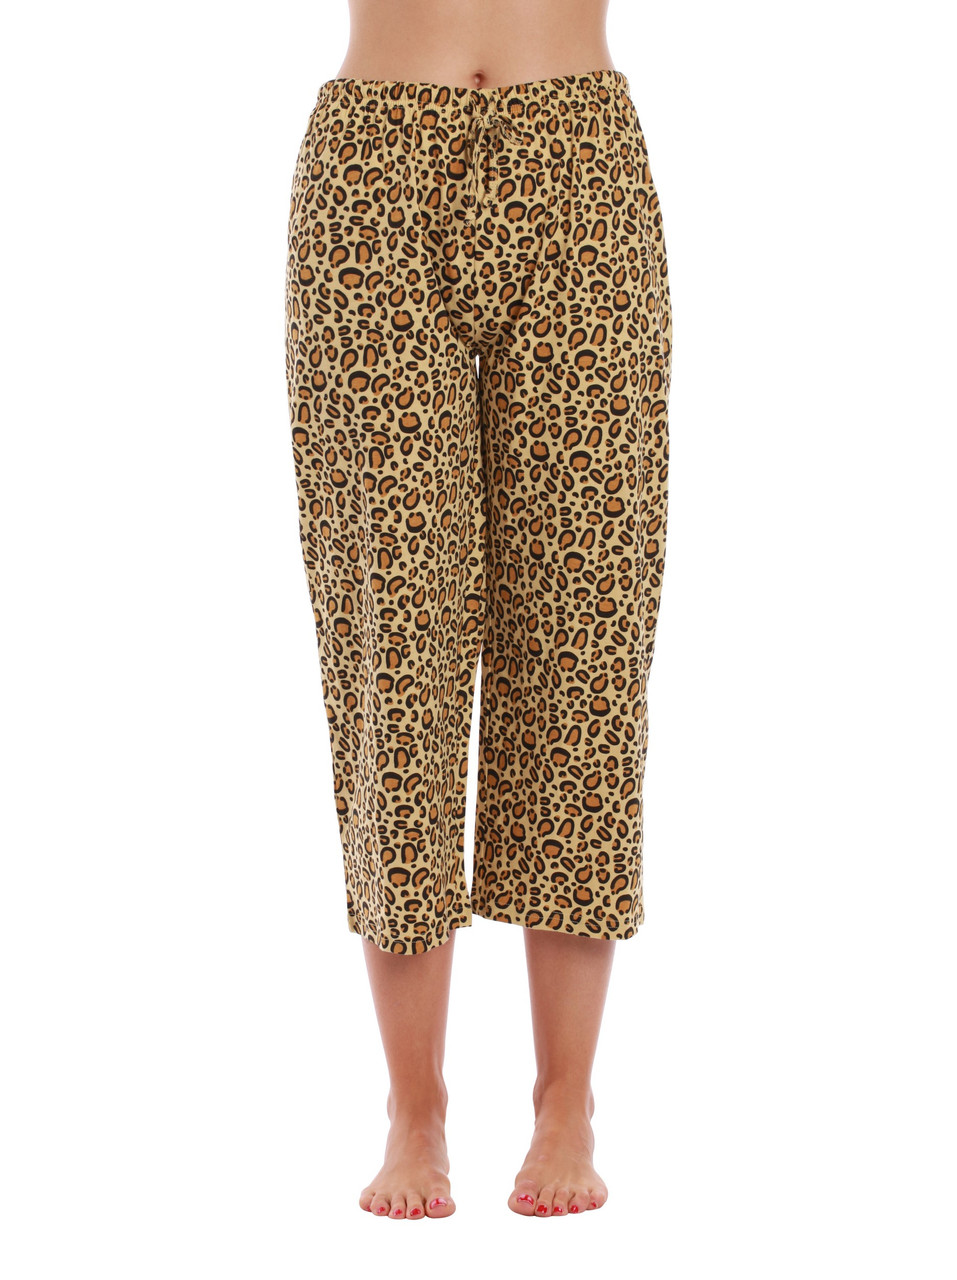 Just Love 100% Cotton Women's Capri Pajama Pants Sleepwear - Comfortable  and Stylish - Just Love Fashion